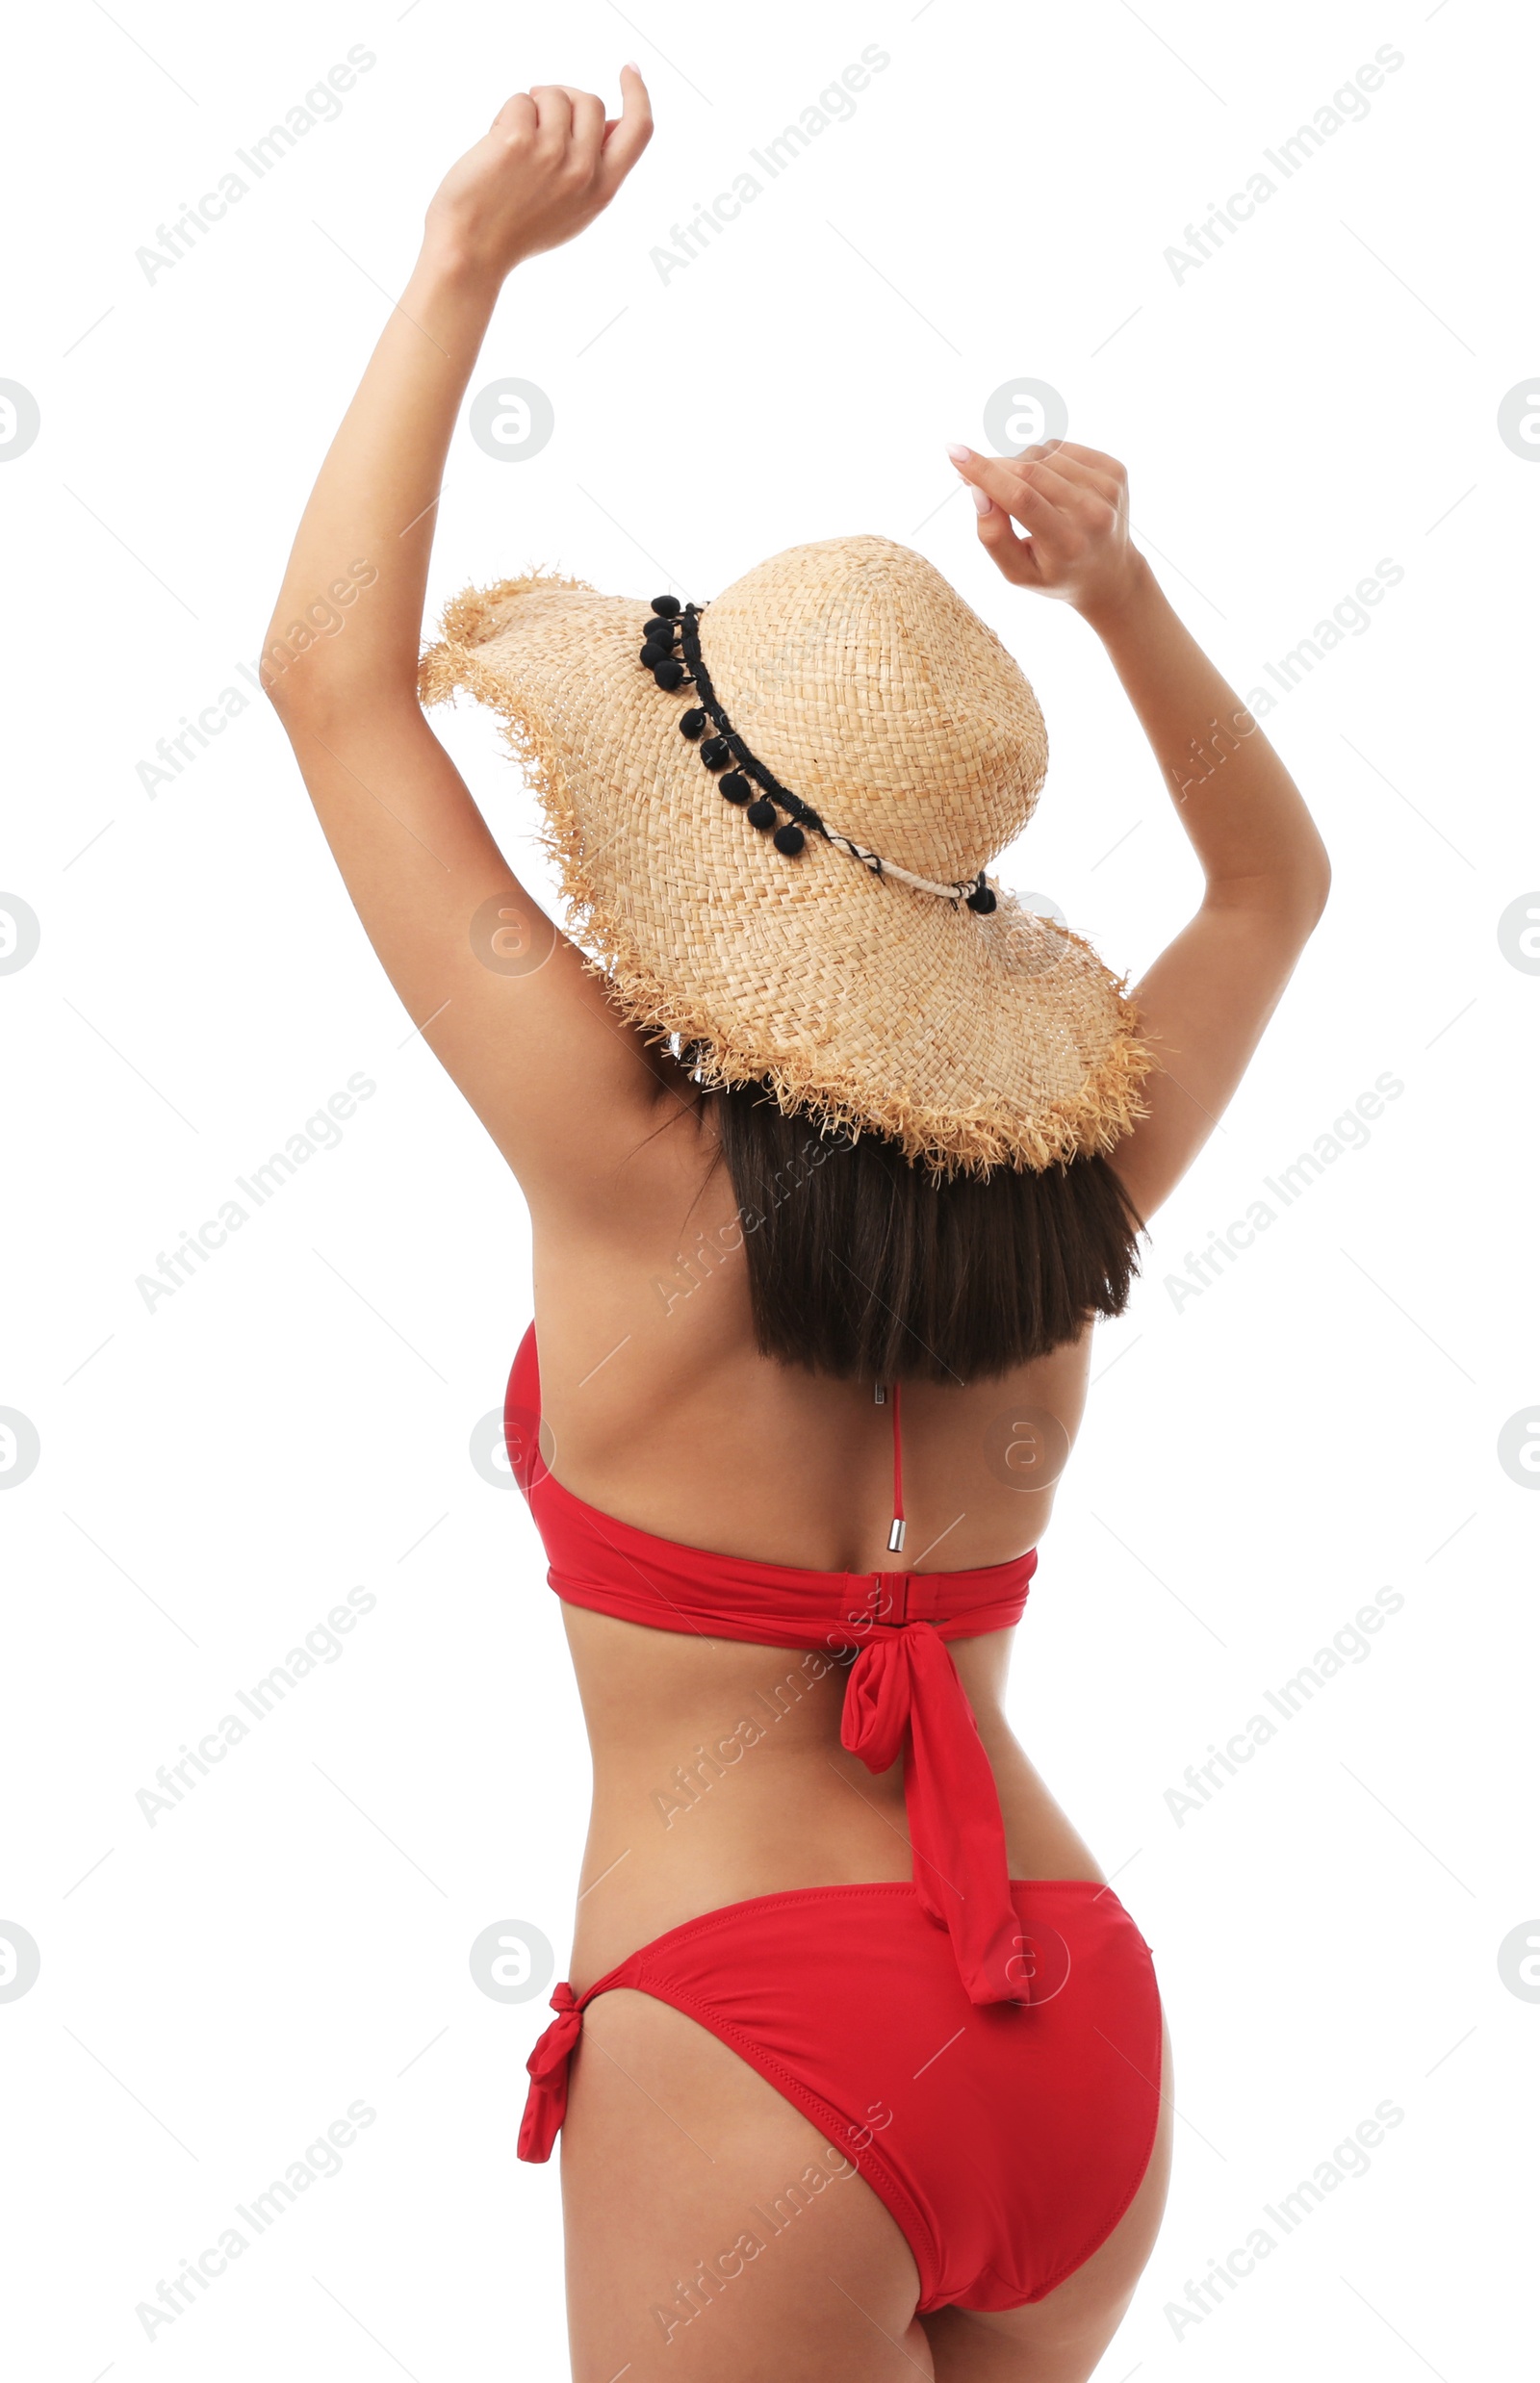 Photo of Pretty sexy woman with slim body in stylish red bikini on white background